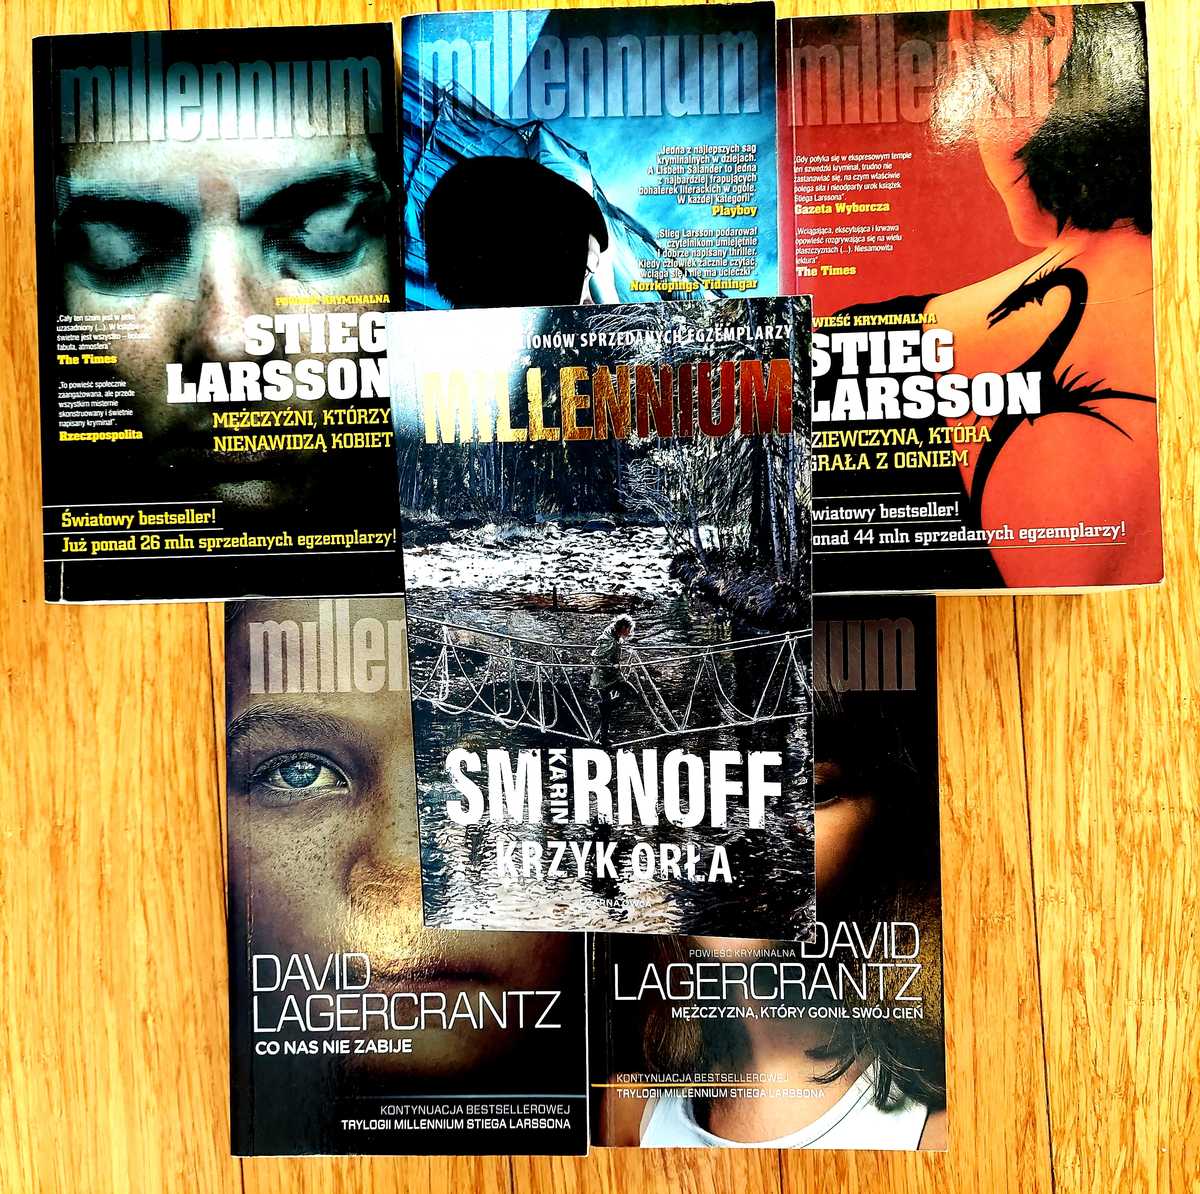 Seria Millennium Stiega Larssona, Dacida Lagercrantza i Karin Smirnoff